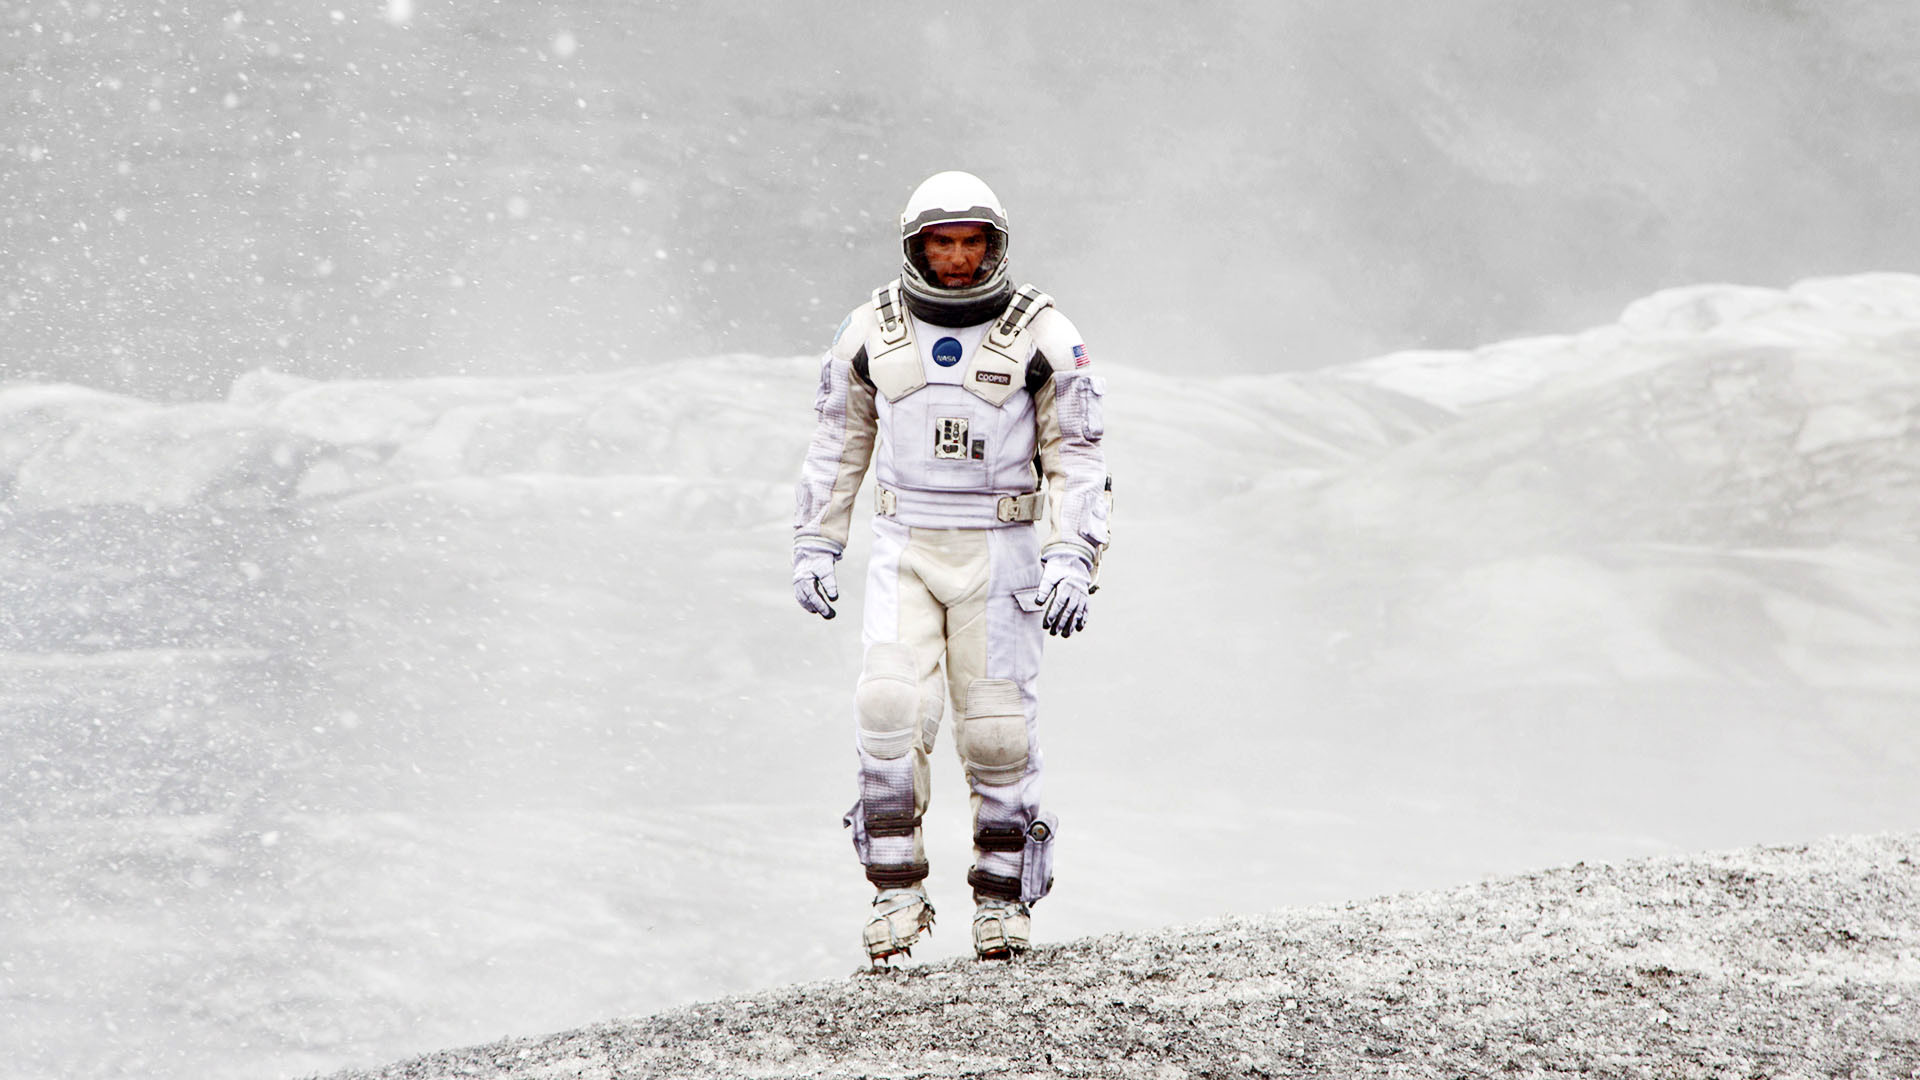 Interstellar, Cooper exploring, wearing space suit wallpaper